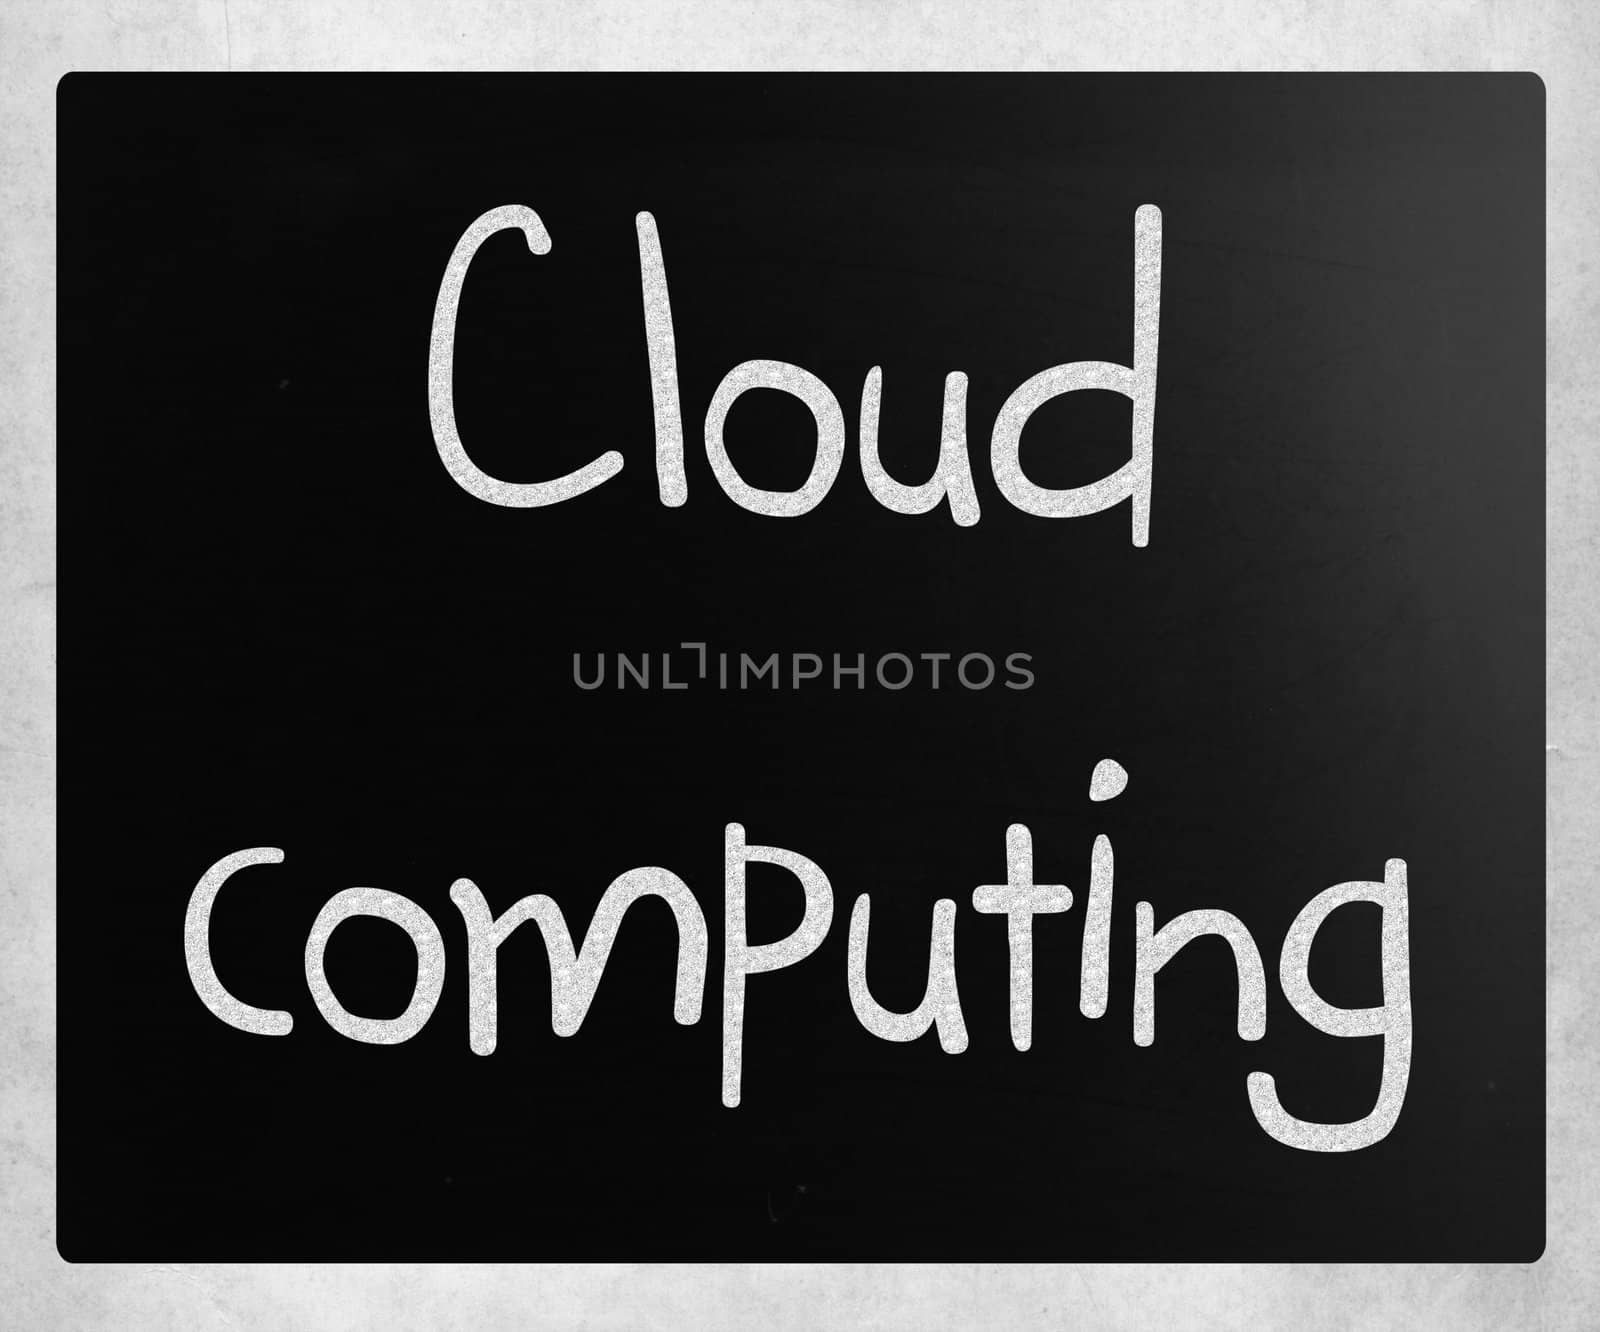 "Cloud computing" handwritten with white chalk on a blackboard